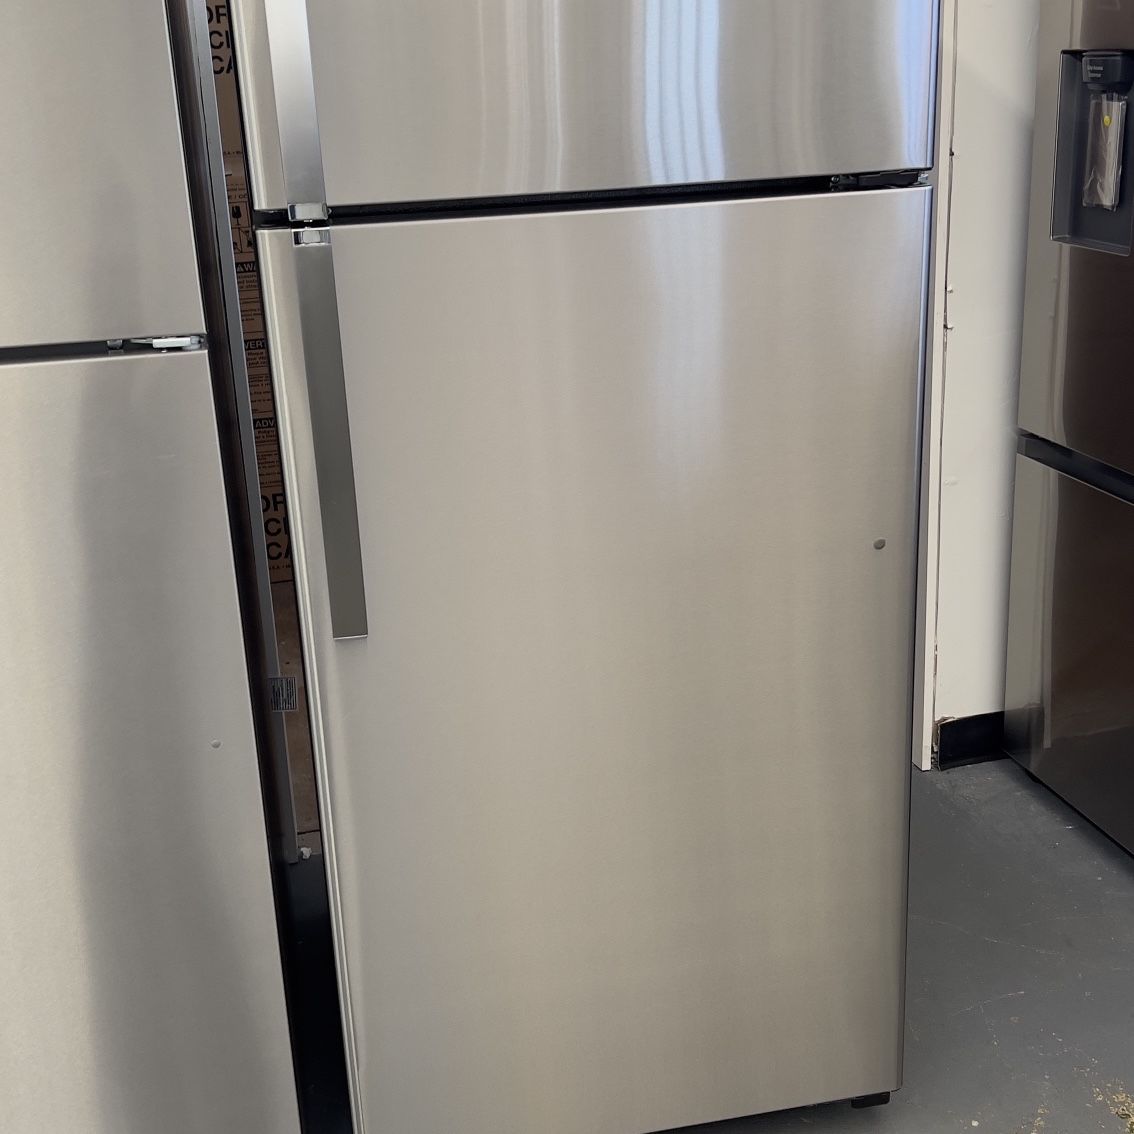 New GE Stainless Steel Refrigerator 